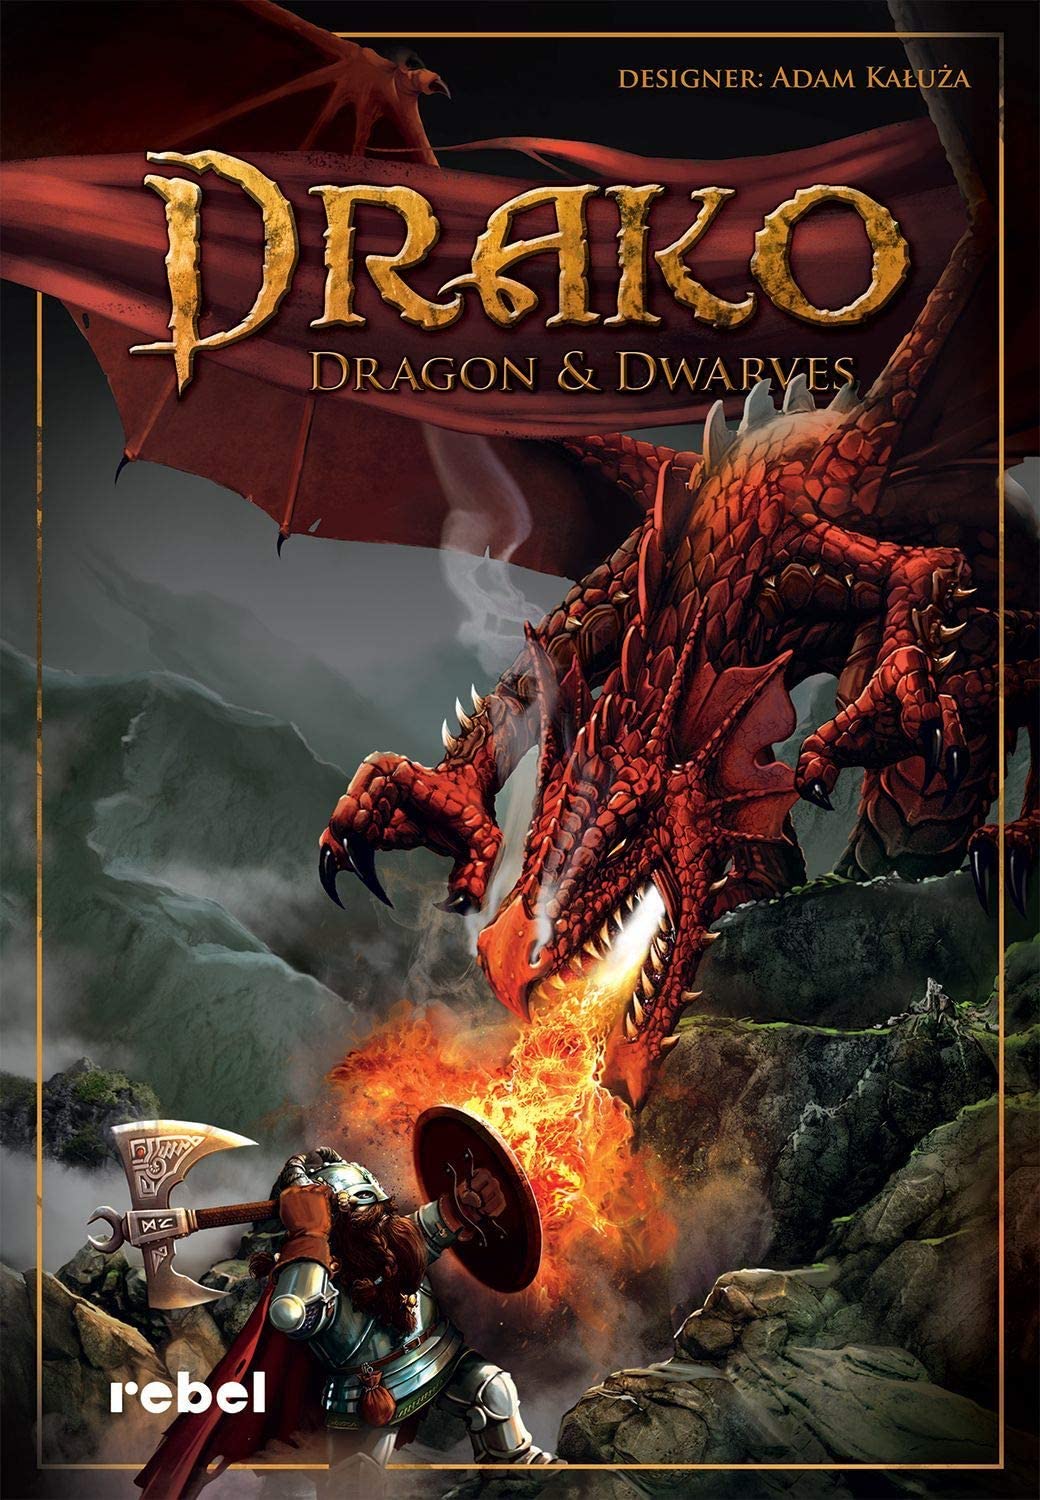 Drako Dragon & Dwarves